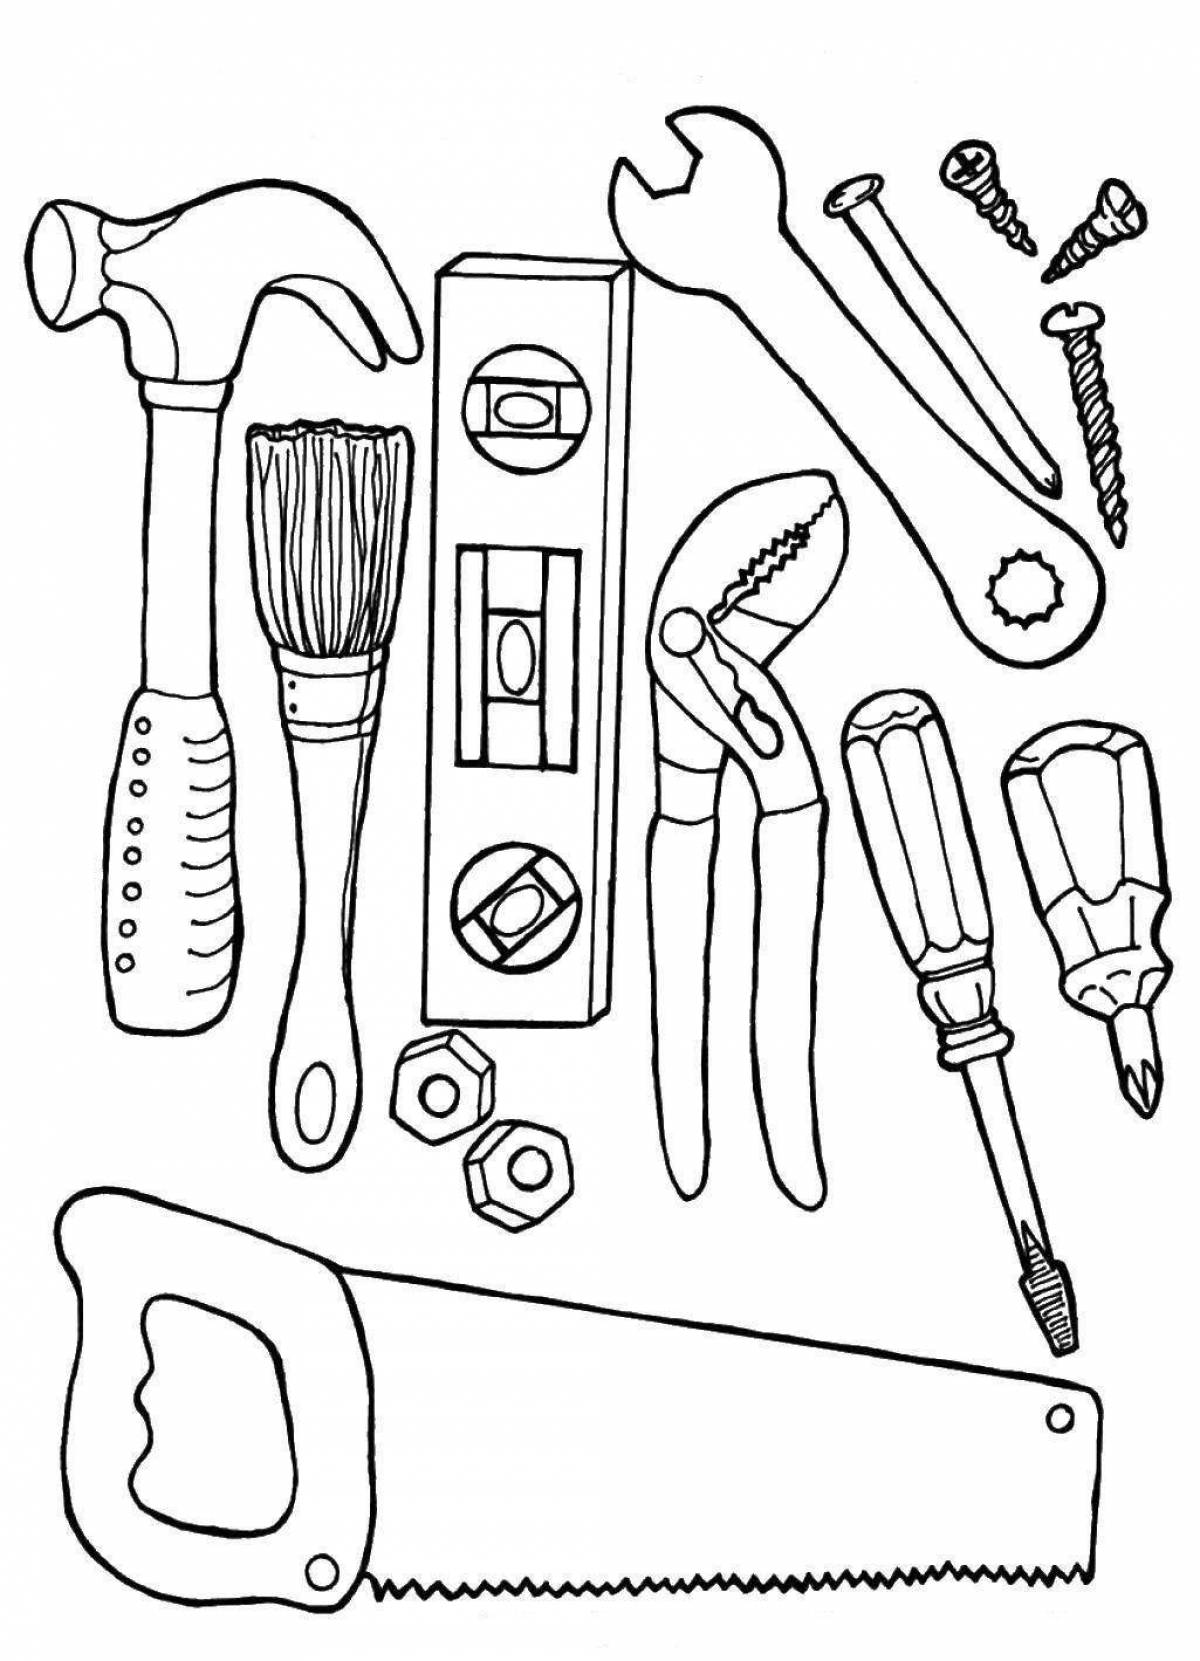 Children's tools #11